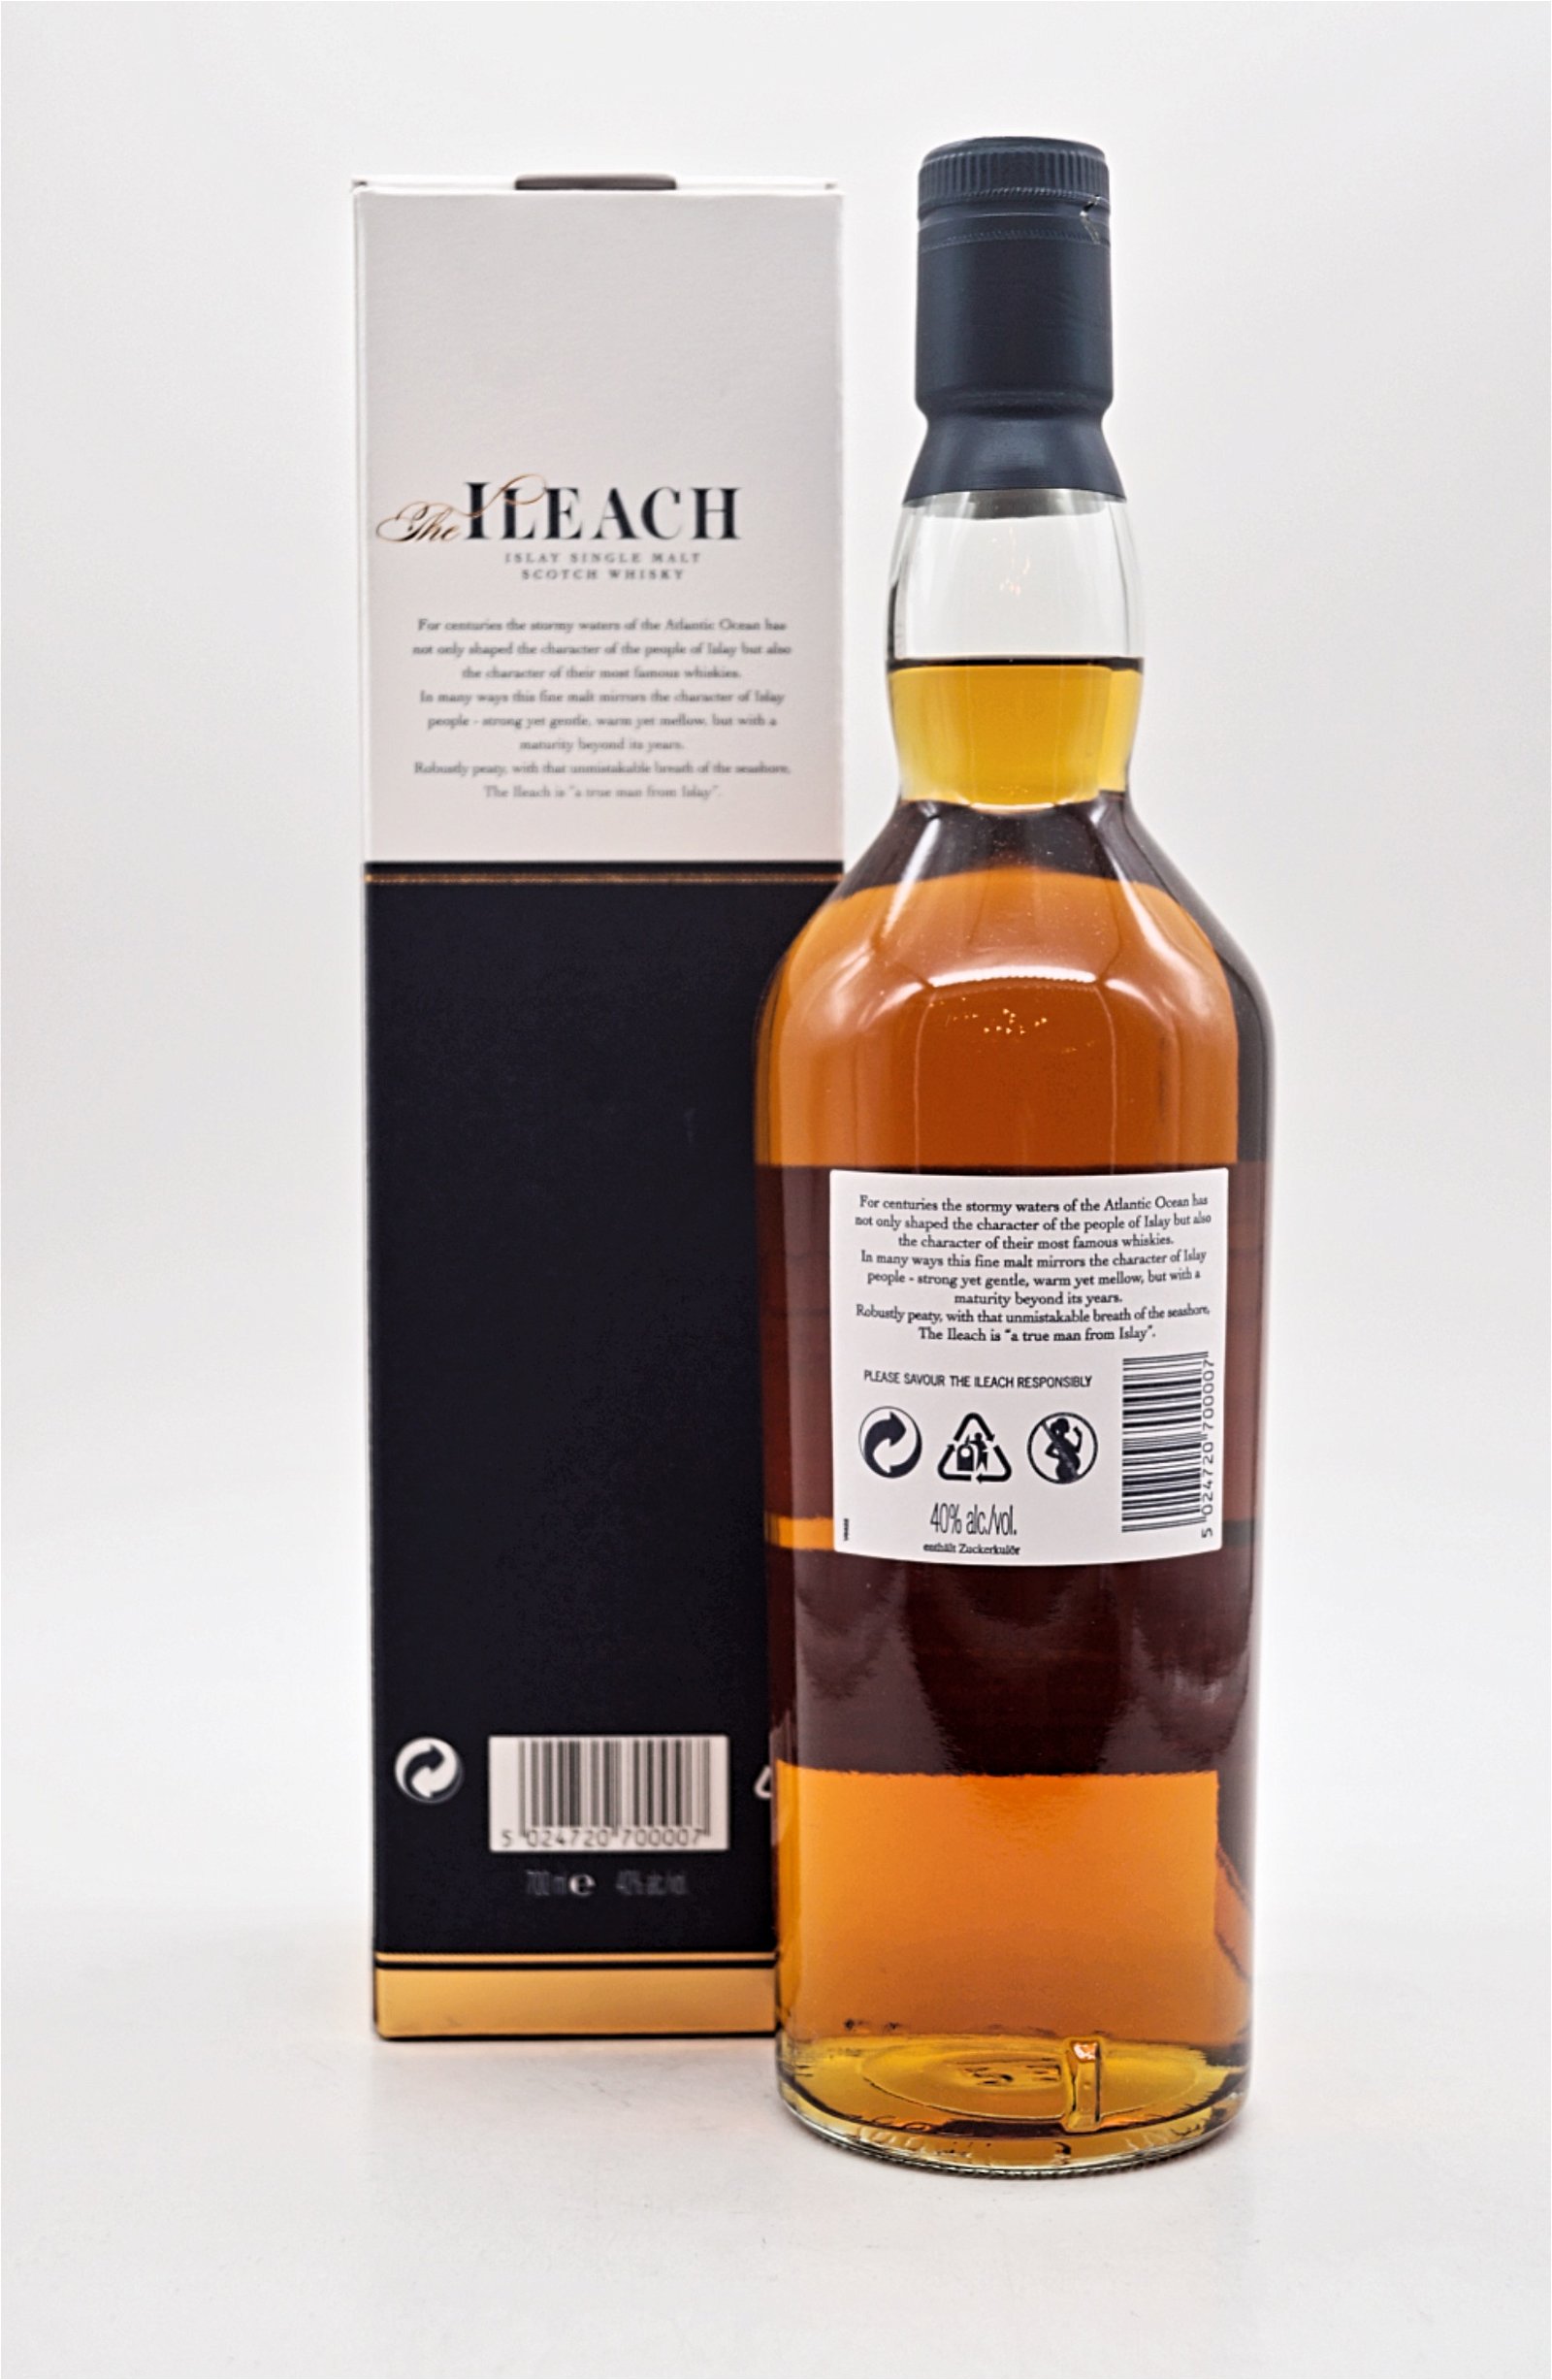 The Ileach Peated Single Malt Scotch Whisky